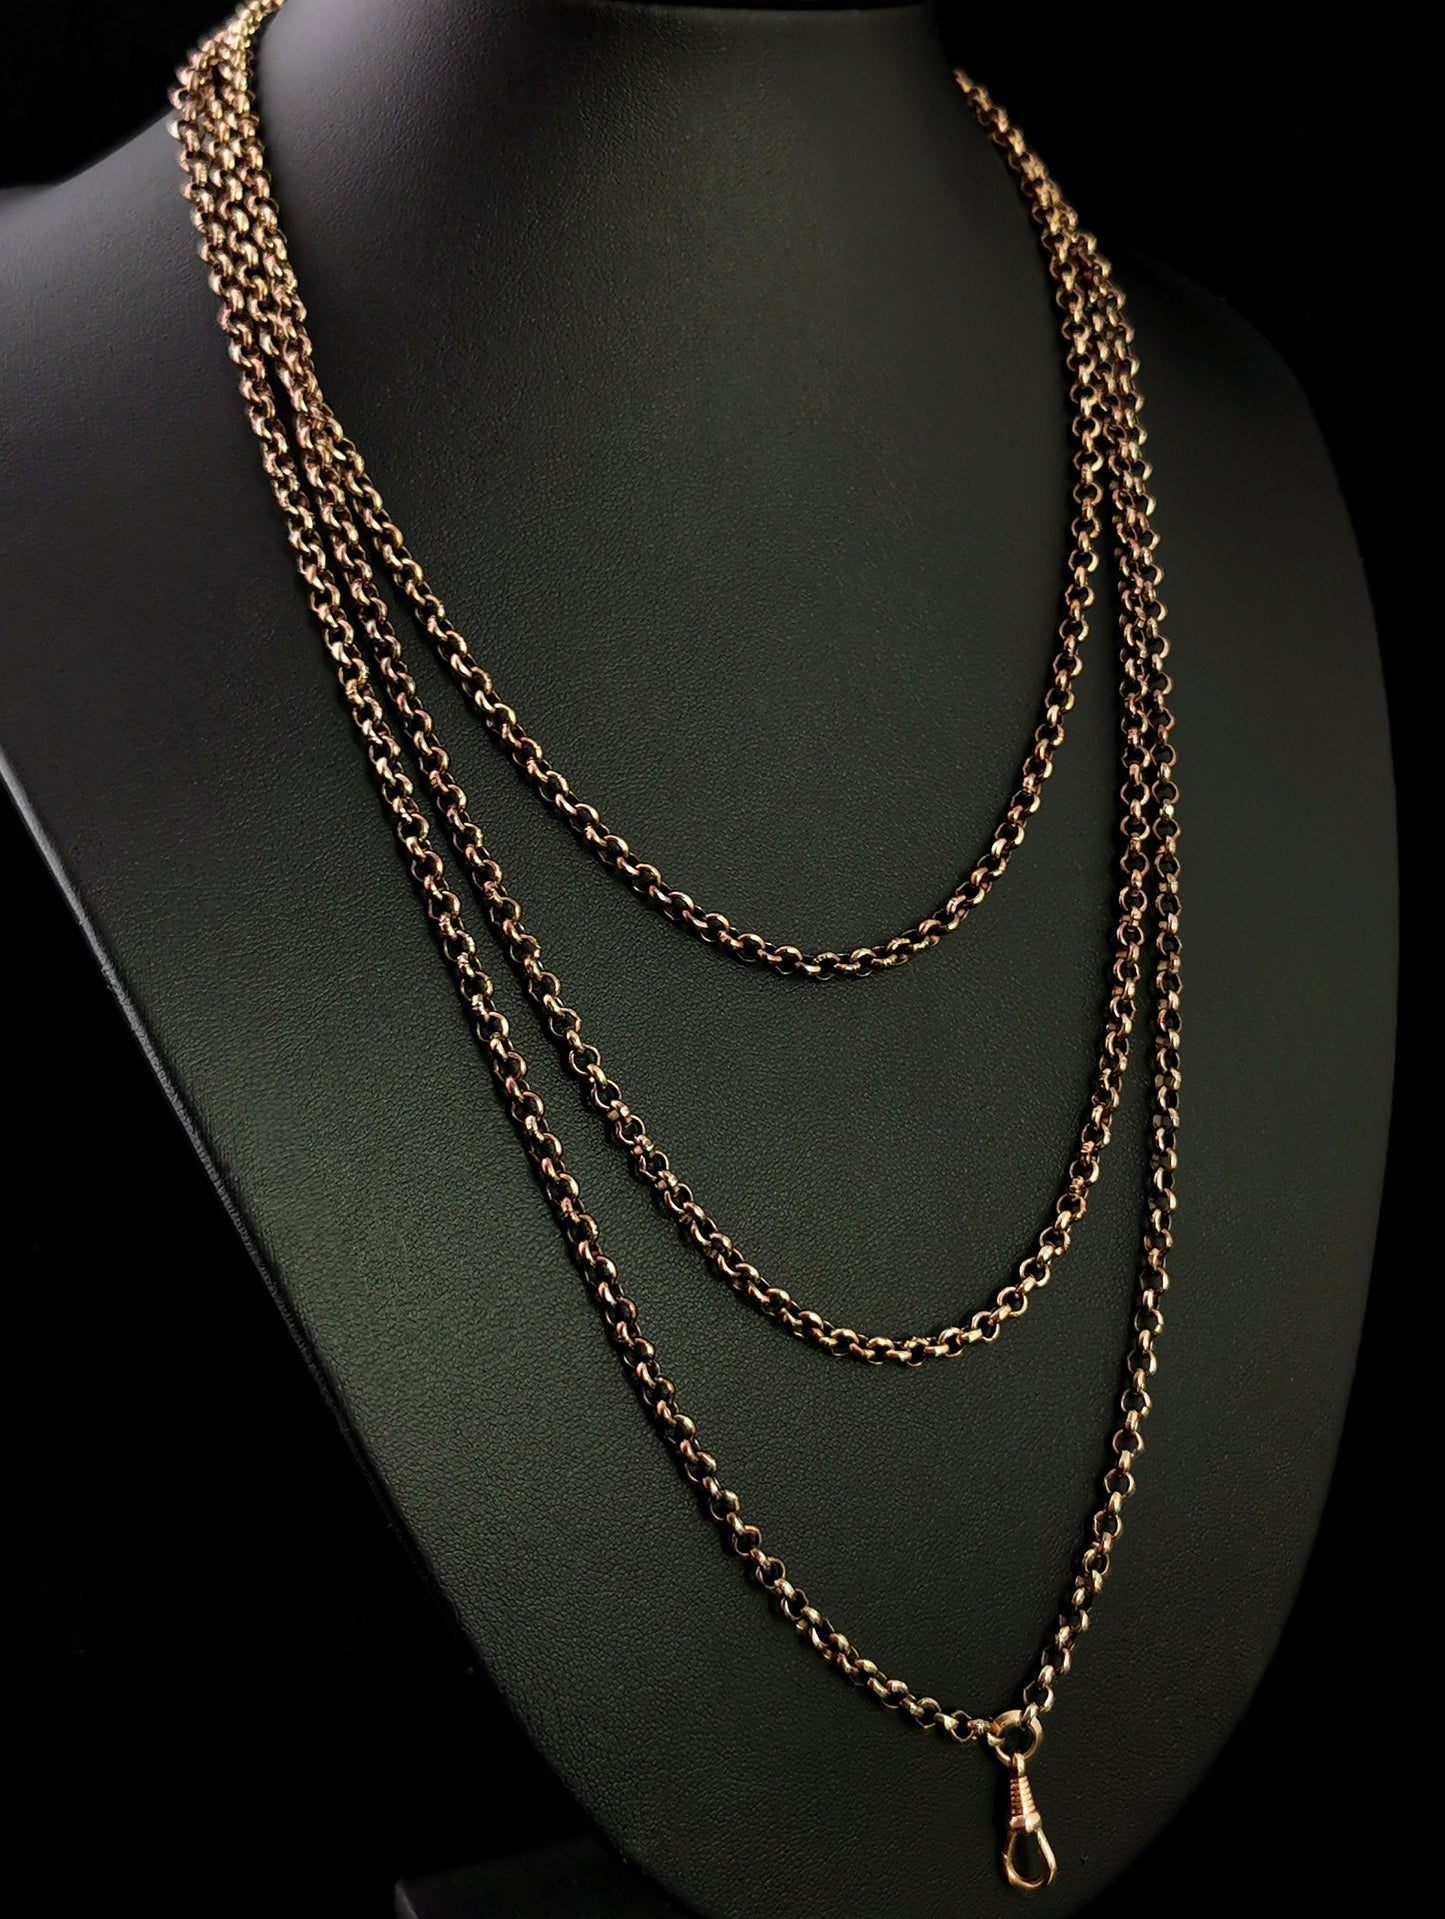 Victorian longuard chain, muff chain necklace, belcher link